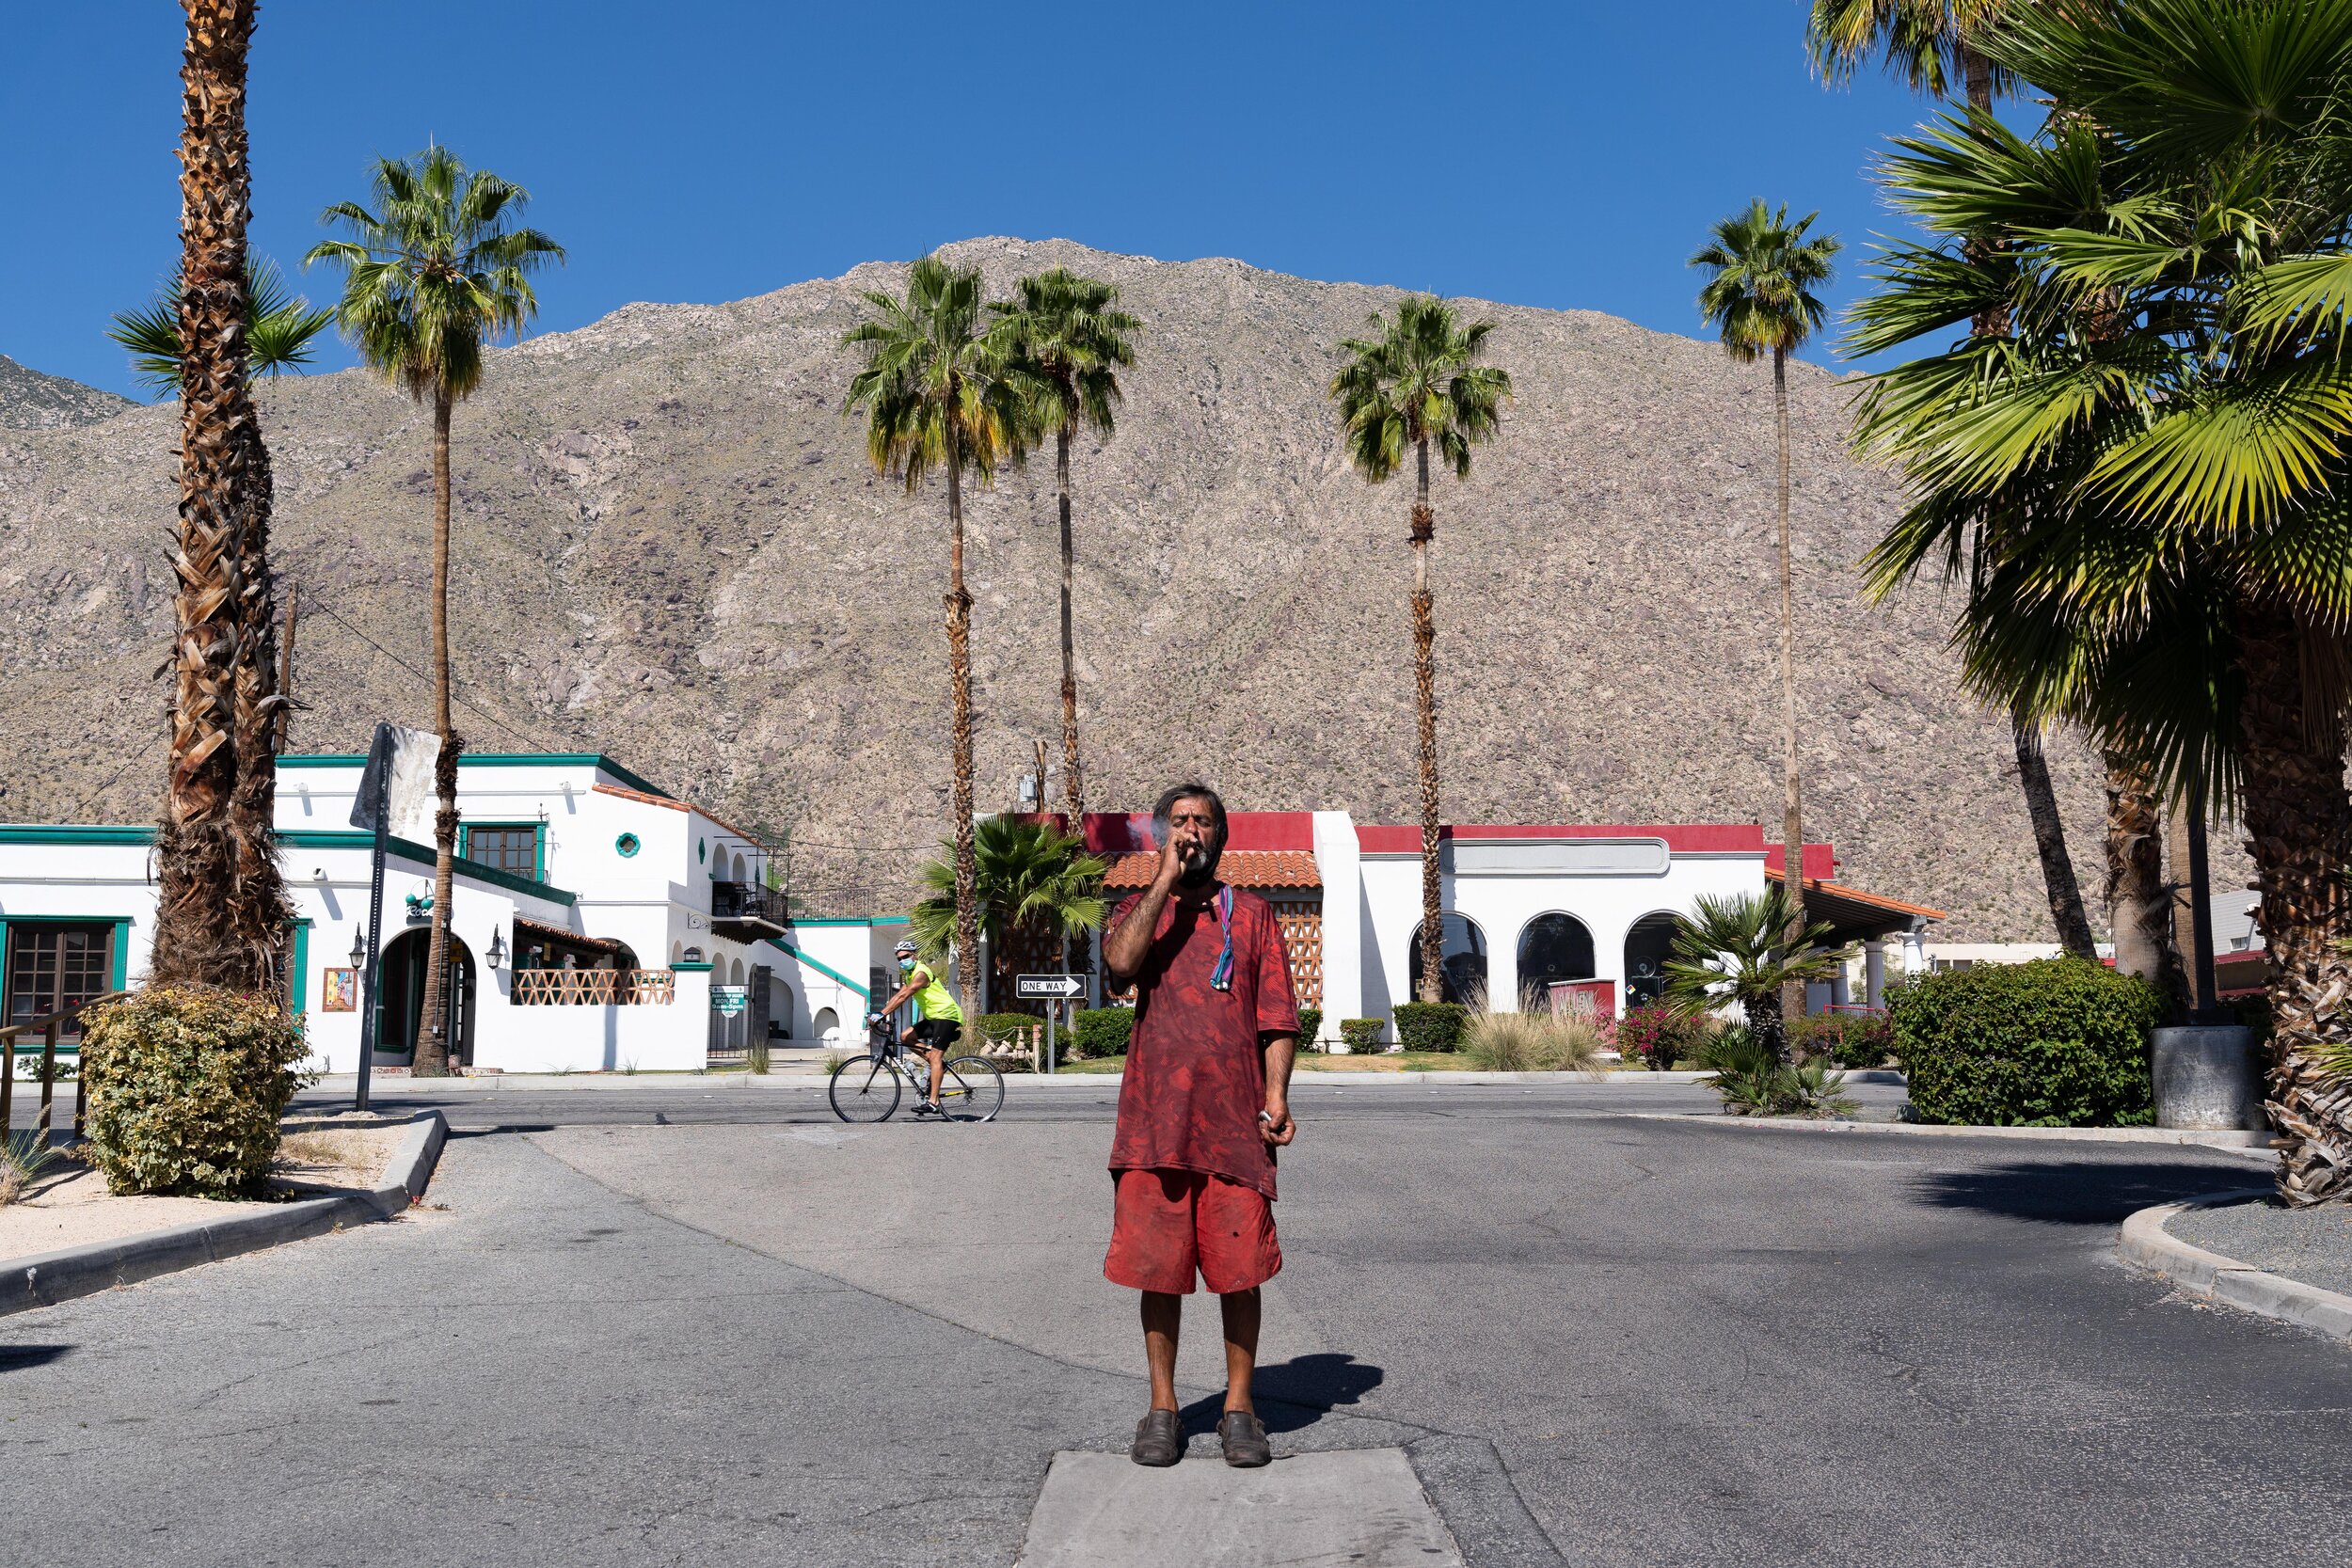  “I once met god’s brother, James.” - Saad | 04/27/20 (Palm Springs, CA) 